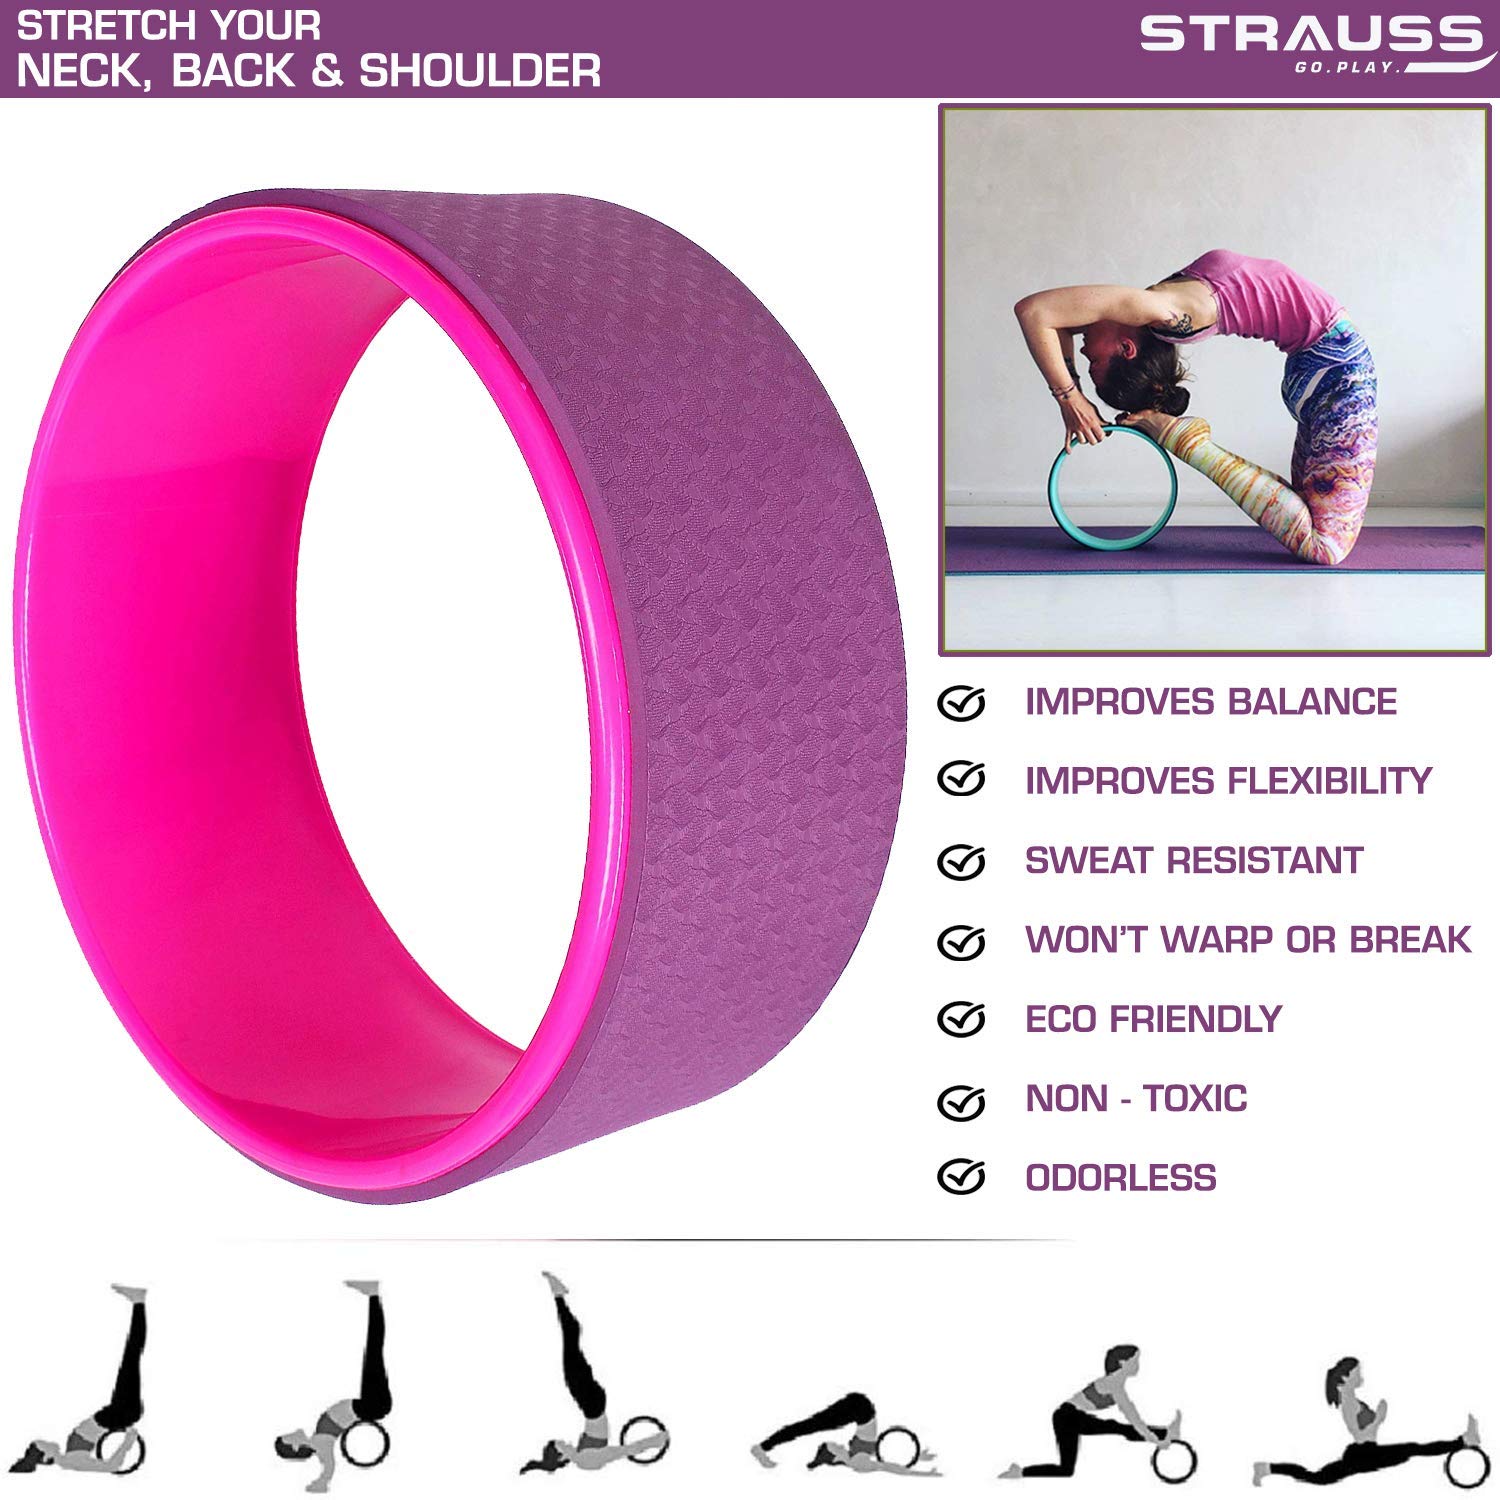 Strauss Grid Foam Roller, 33cm (Purple) and Yoga Wheel (Purple)